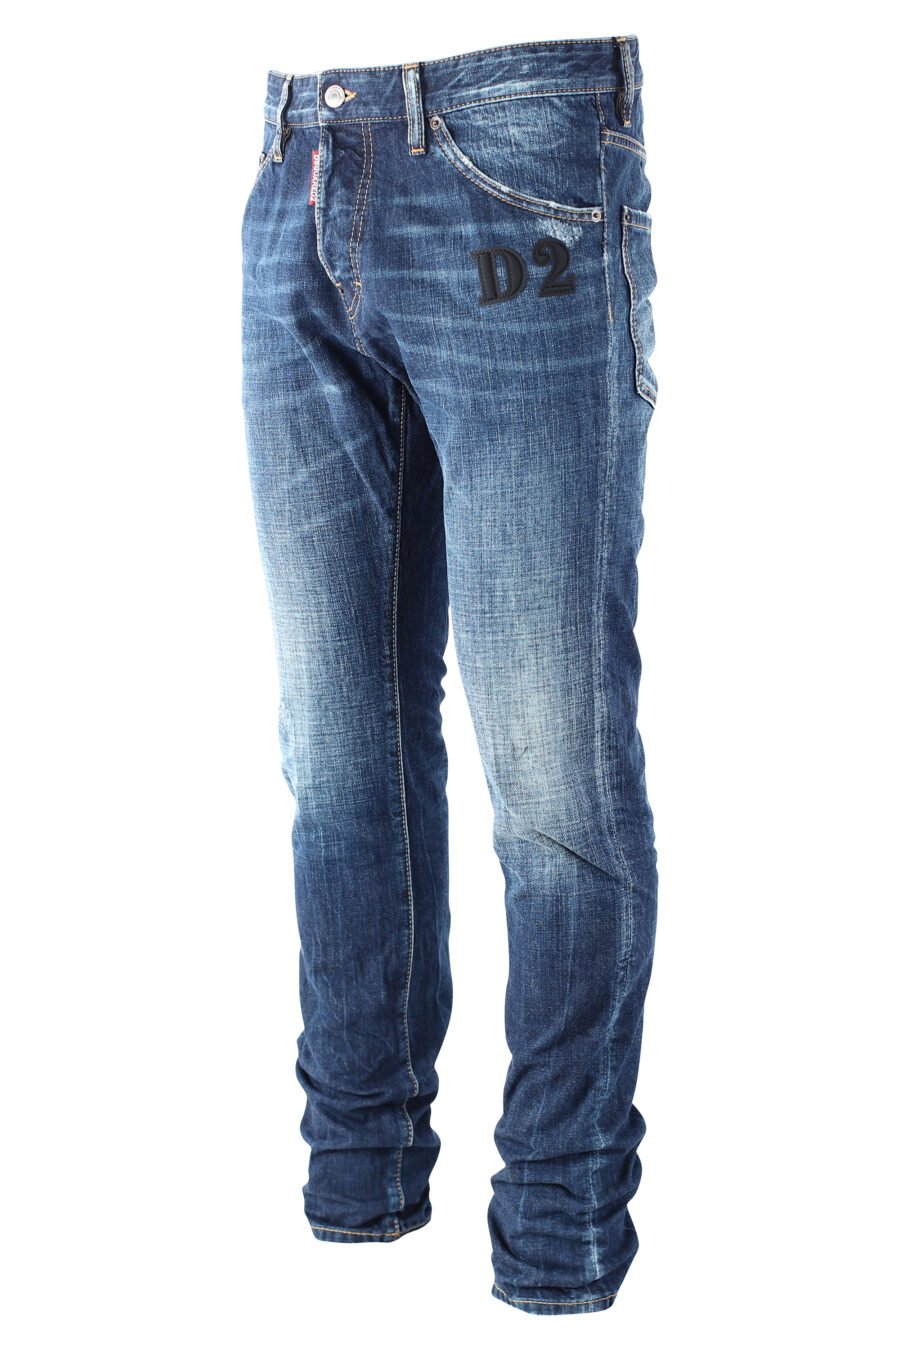 Jeans "cool guy jean" blau mit schwarzem "D2"-Logo - IMG 9688